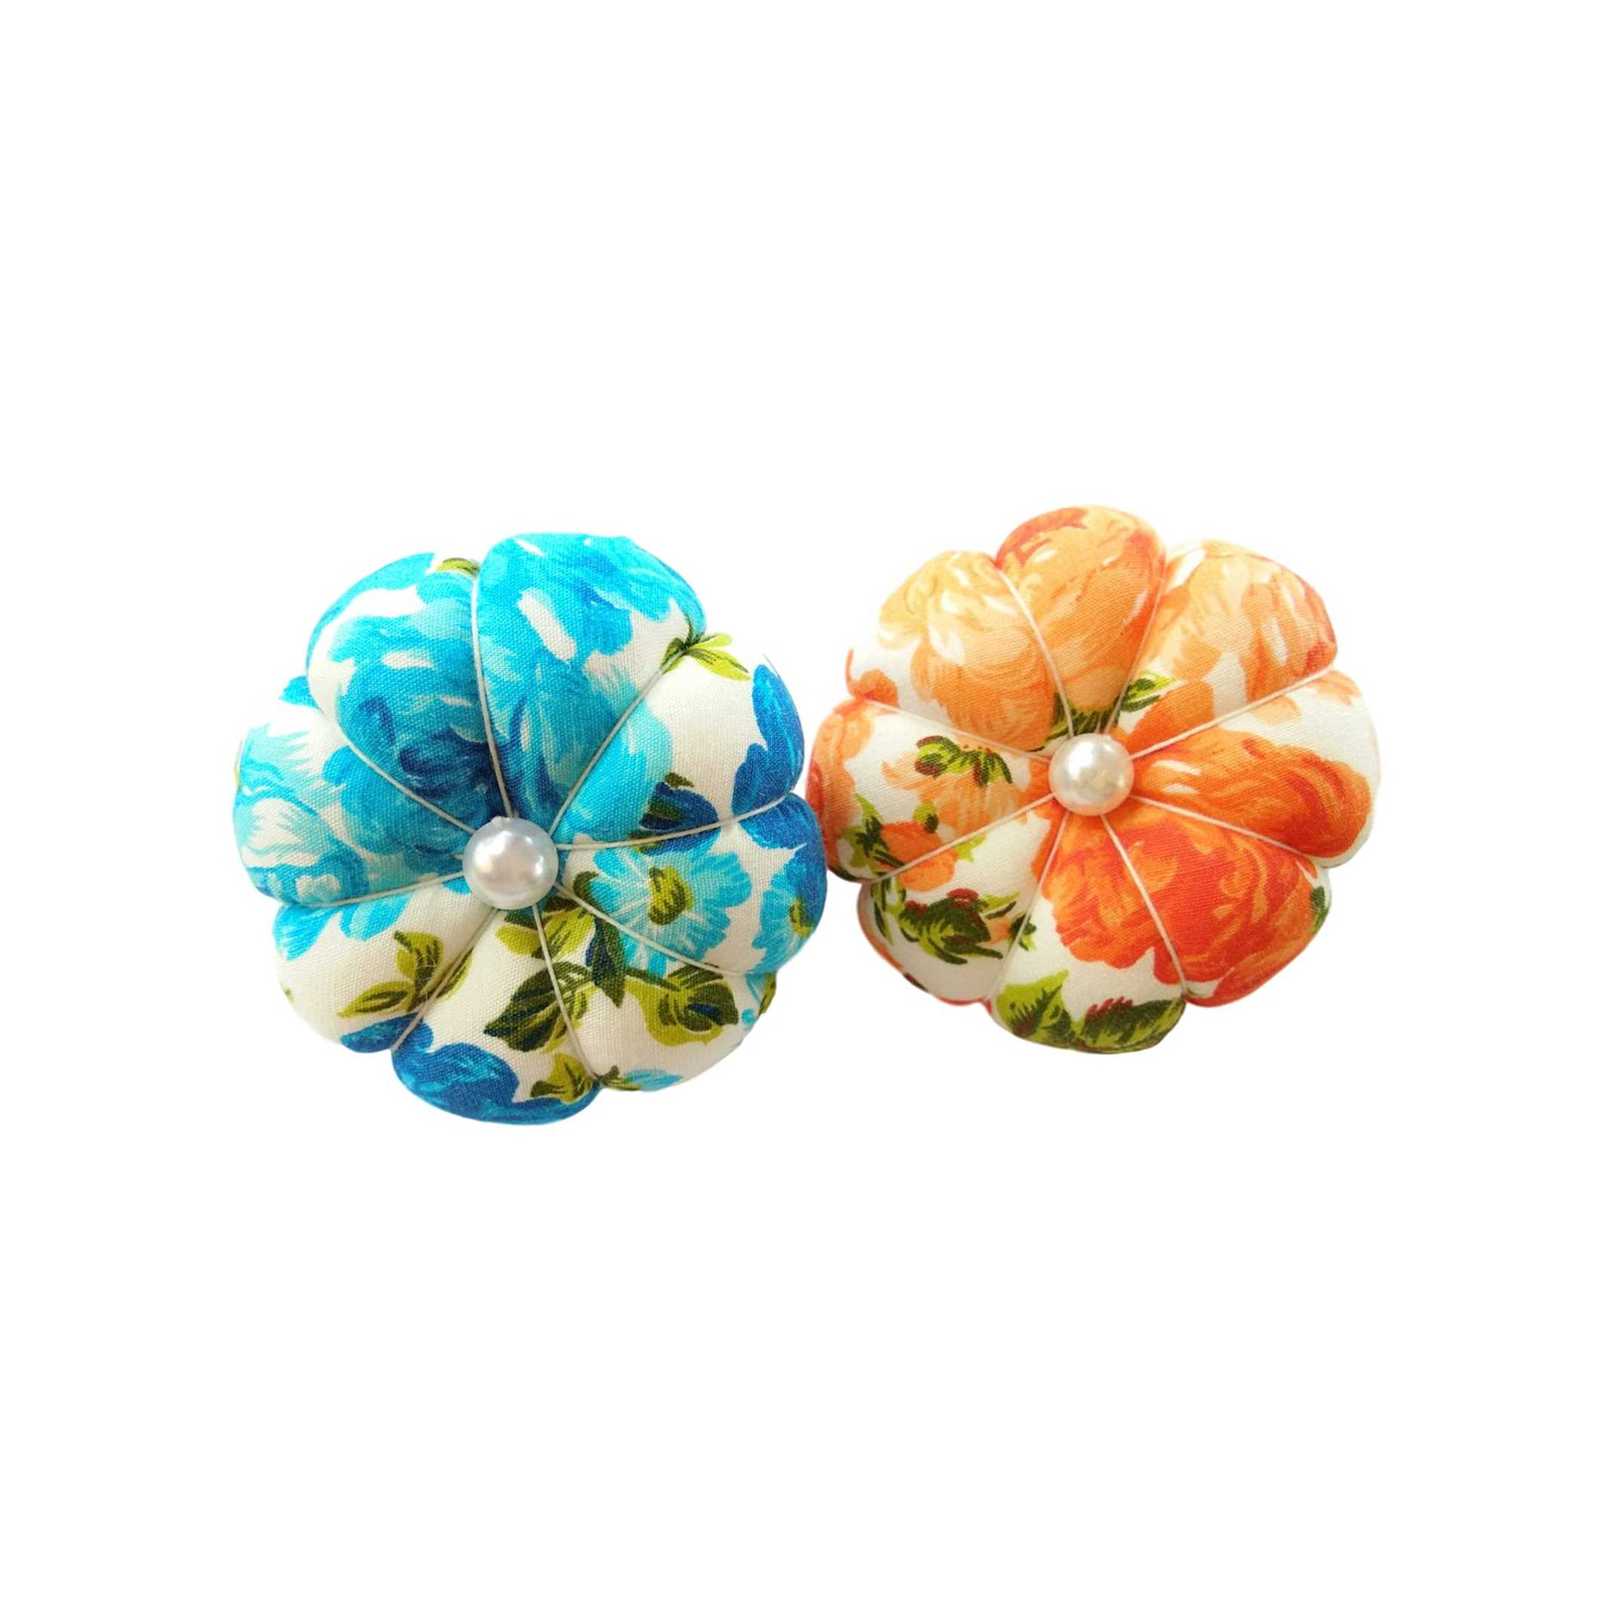 Blue Oran Floral Small Wrist Pin Cushion Pincushion For Sewing With Adjustabl